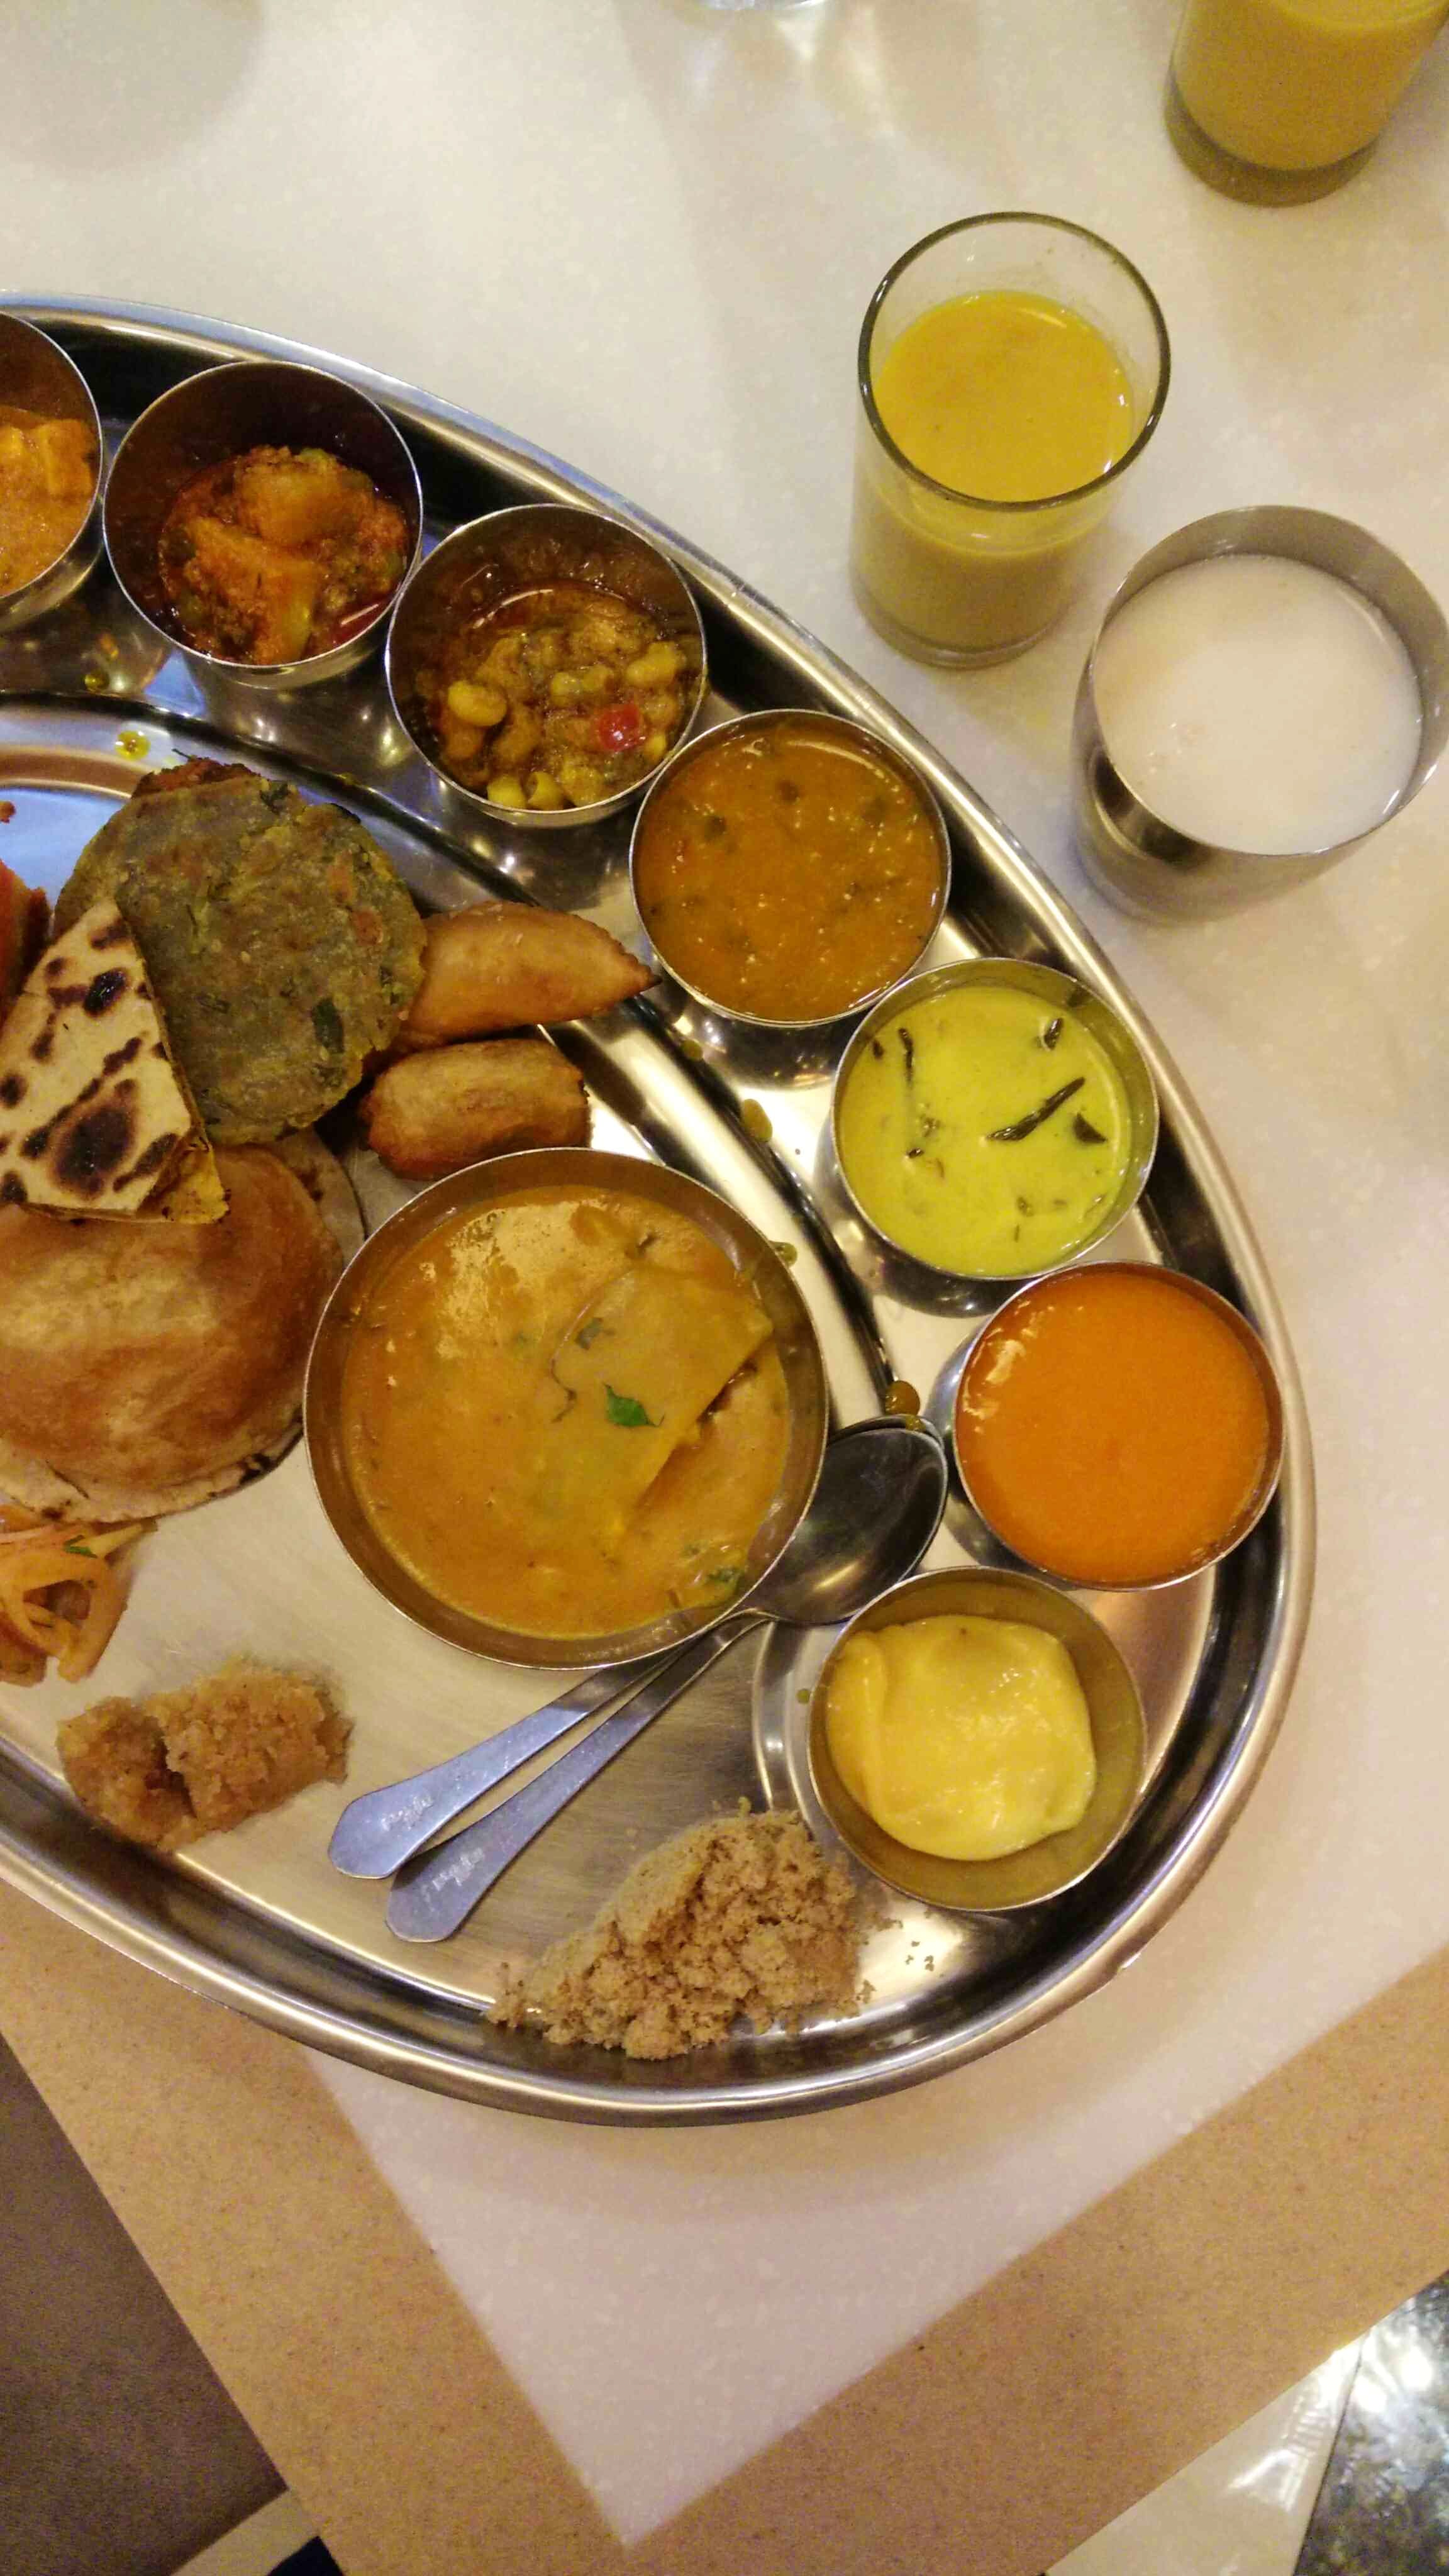 Dish,Food,Cuisine,Meal,Ingredient,Breakfast,Rajasthani cuisine,Brunch,Indian cuisine,Curry